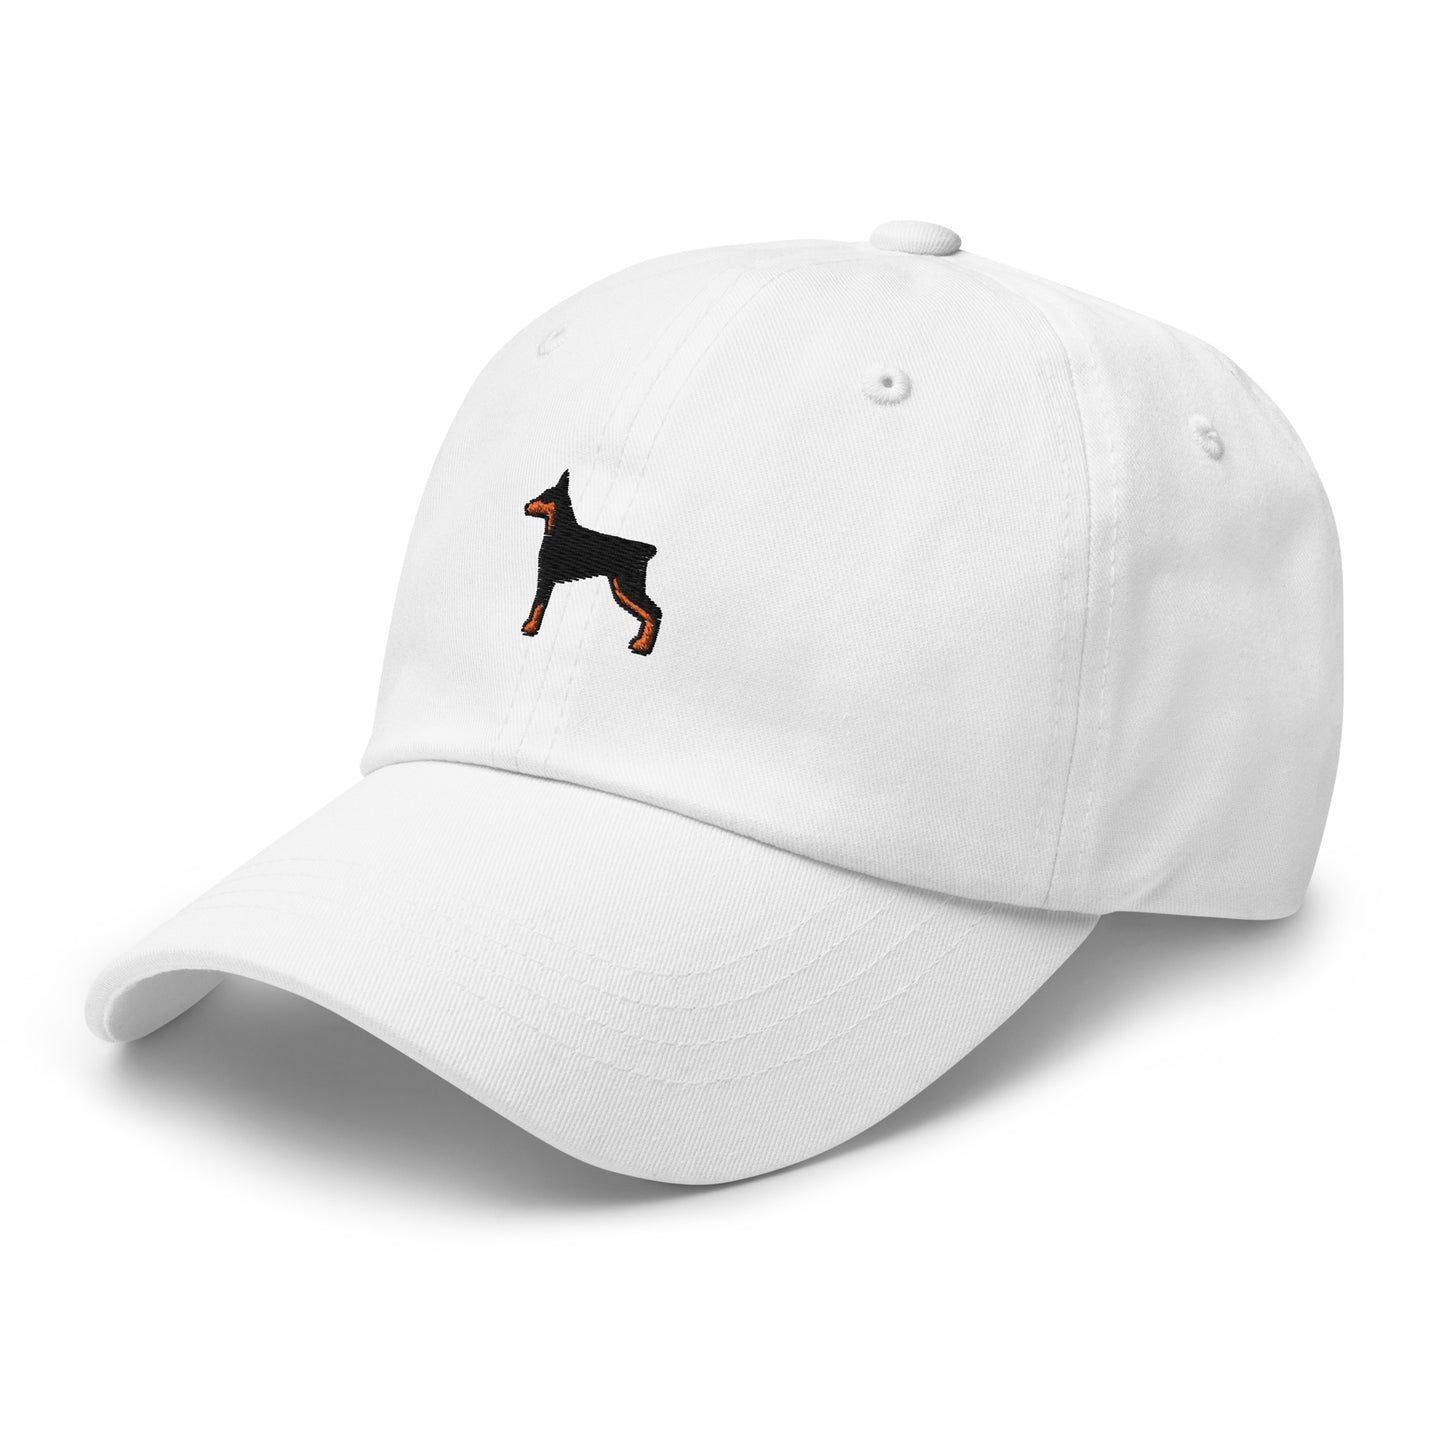 Doberman Dog Embroidered Baseball Cap